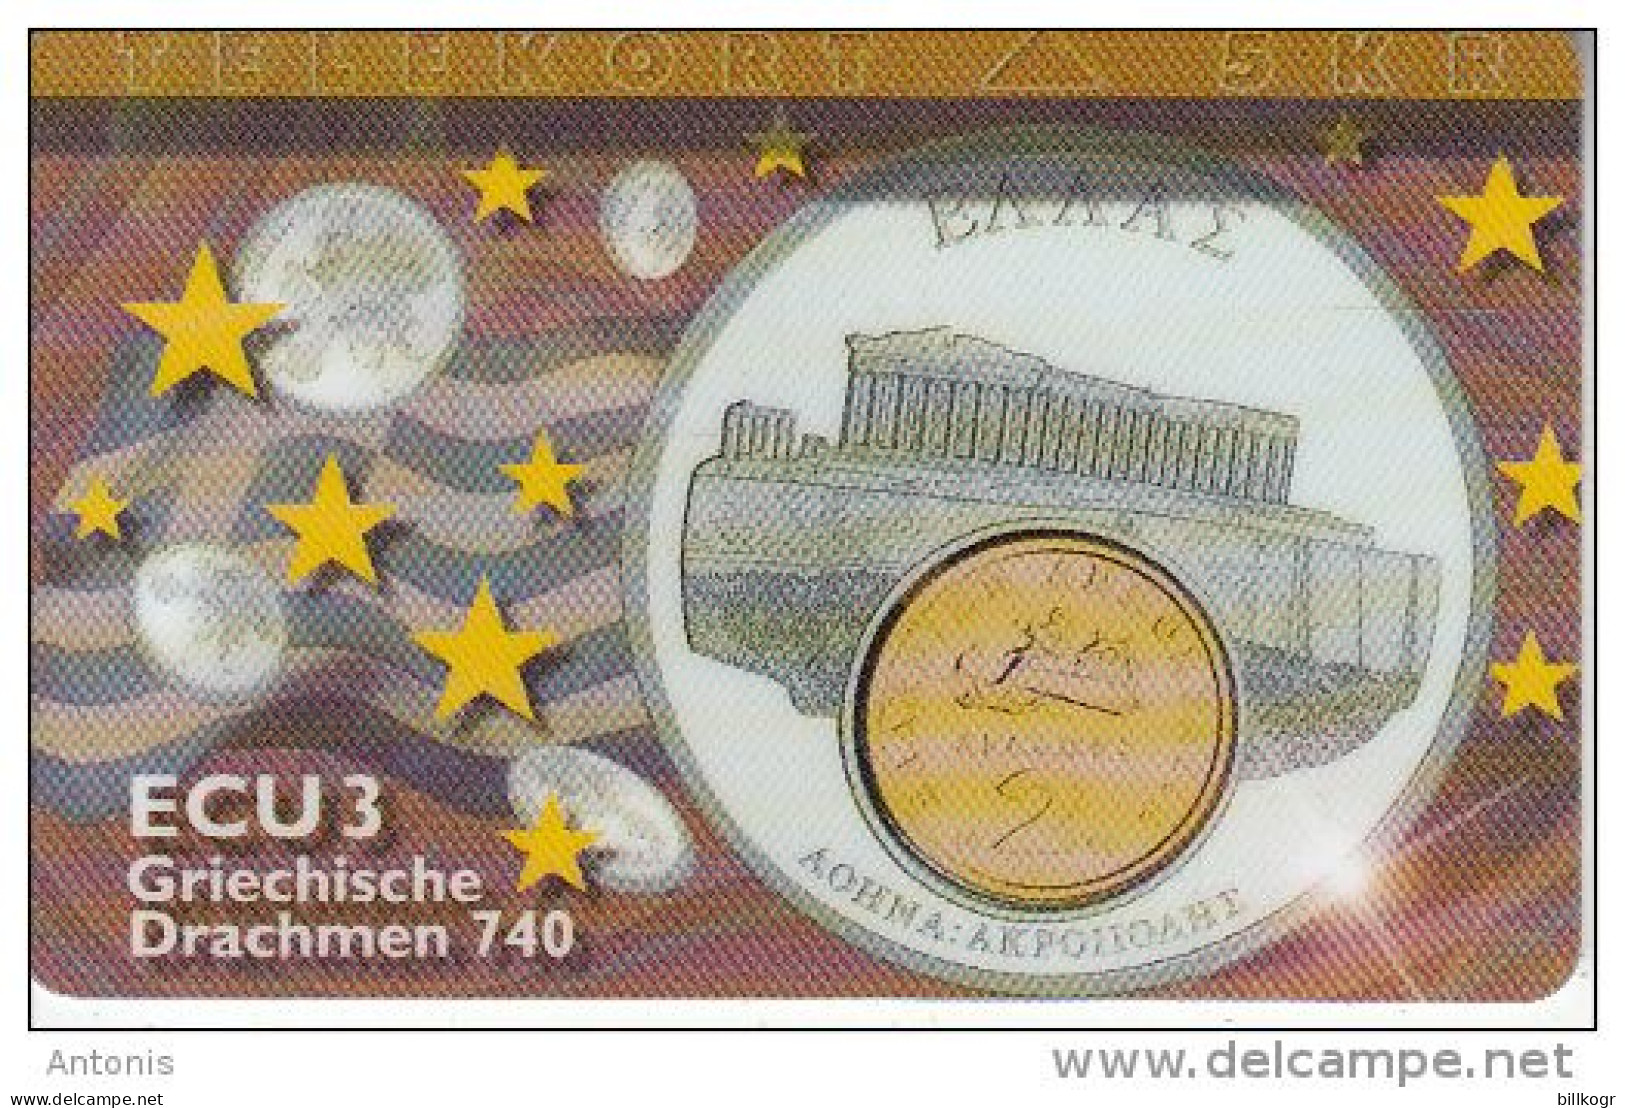 DENMARK - Athens/Acropolis, 2 GRD Coin, ECU Series/Greece, Tirage 700, 04/97, Mint - Dänemark